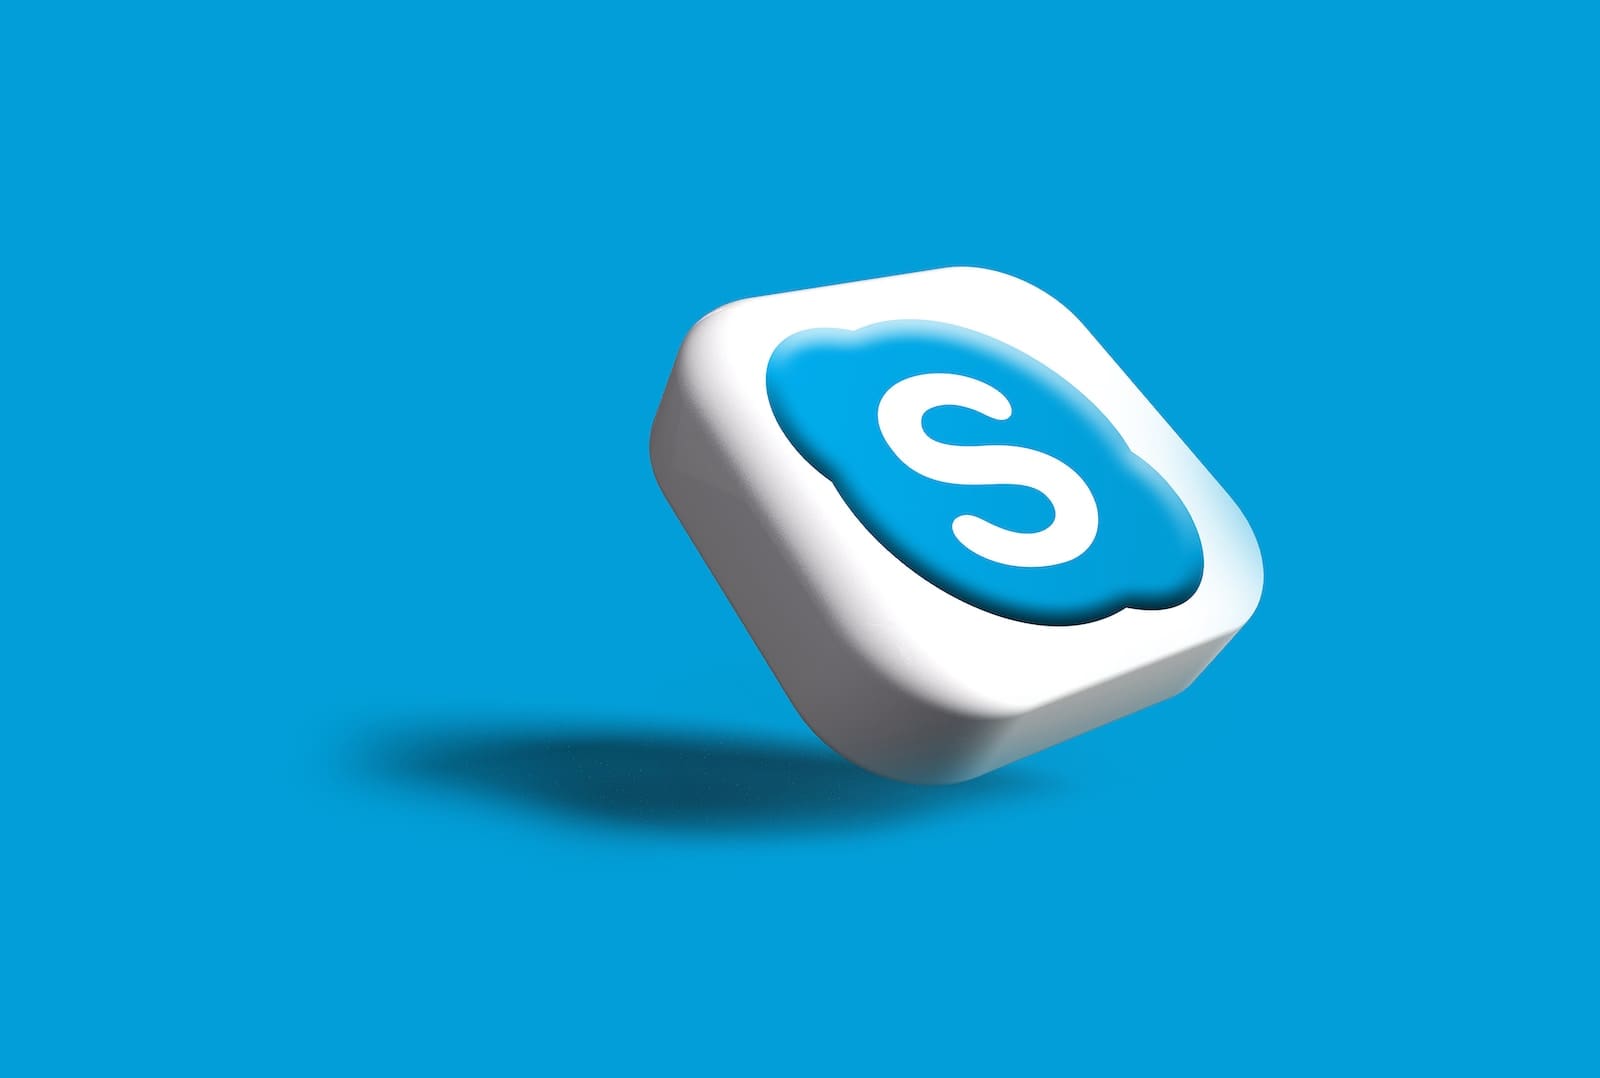 Skype для бізнесу